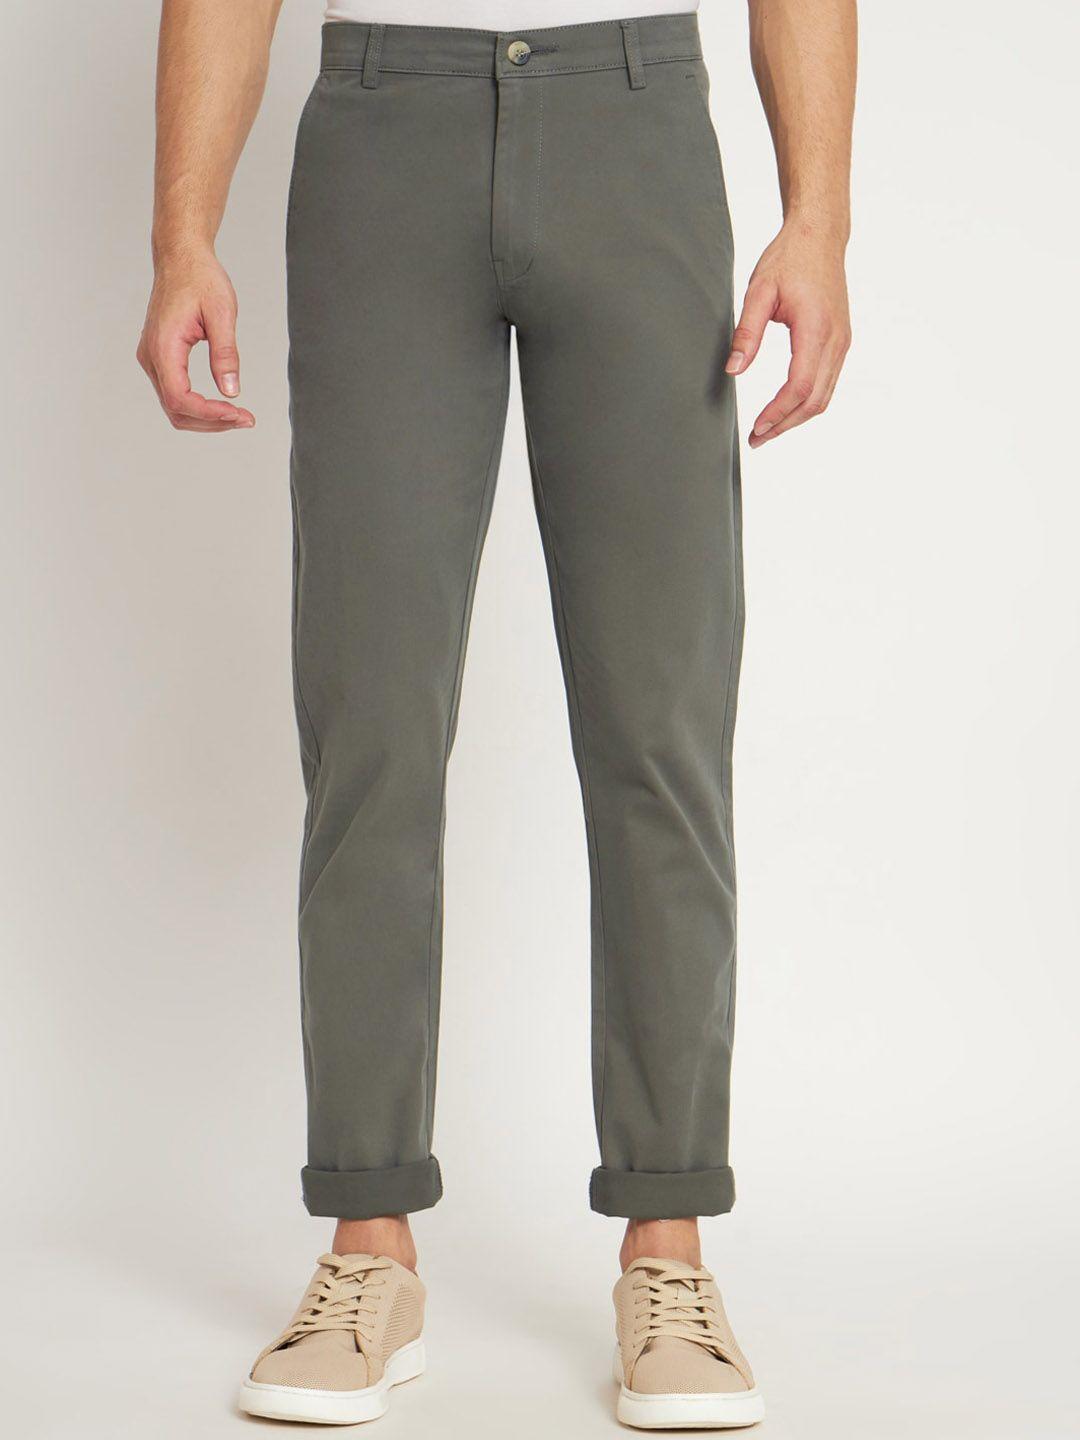 ragzo-men-slim-fit-low-rise-cotton-trousers